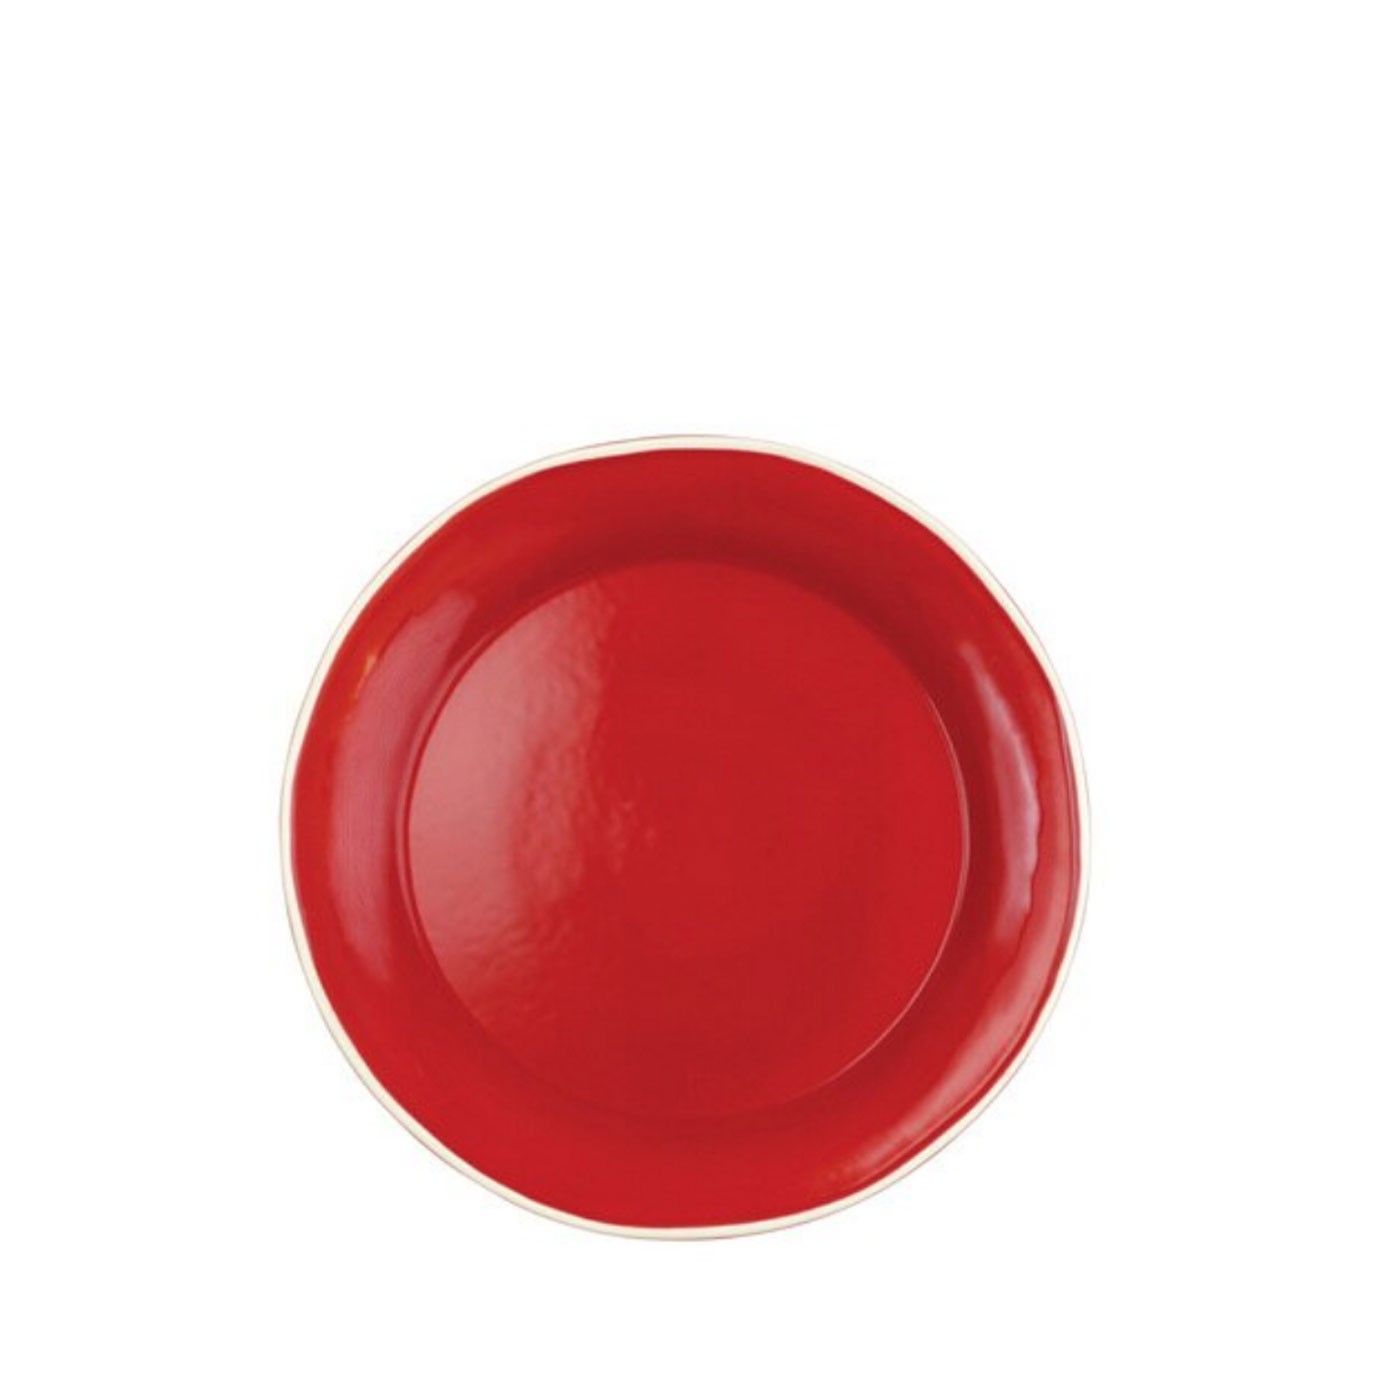 Chroma Red Dinner Plate - Vietri | Eataly.com